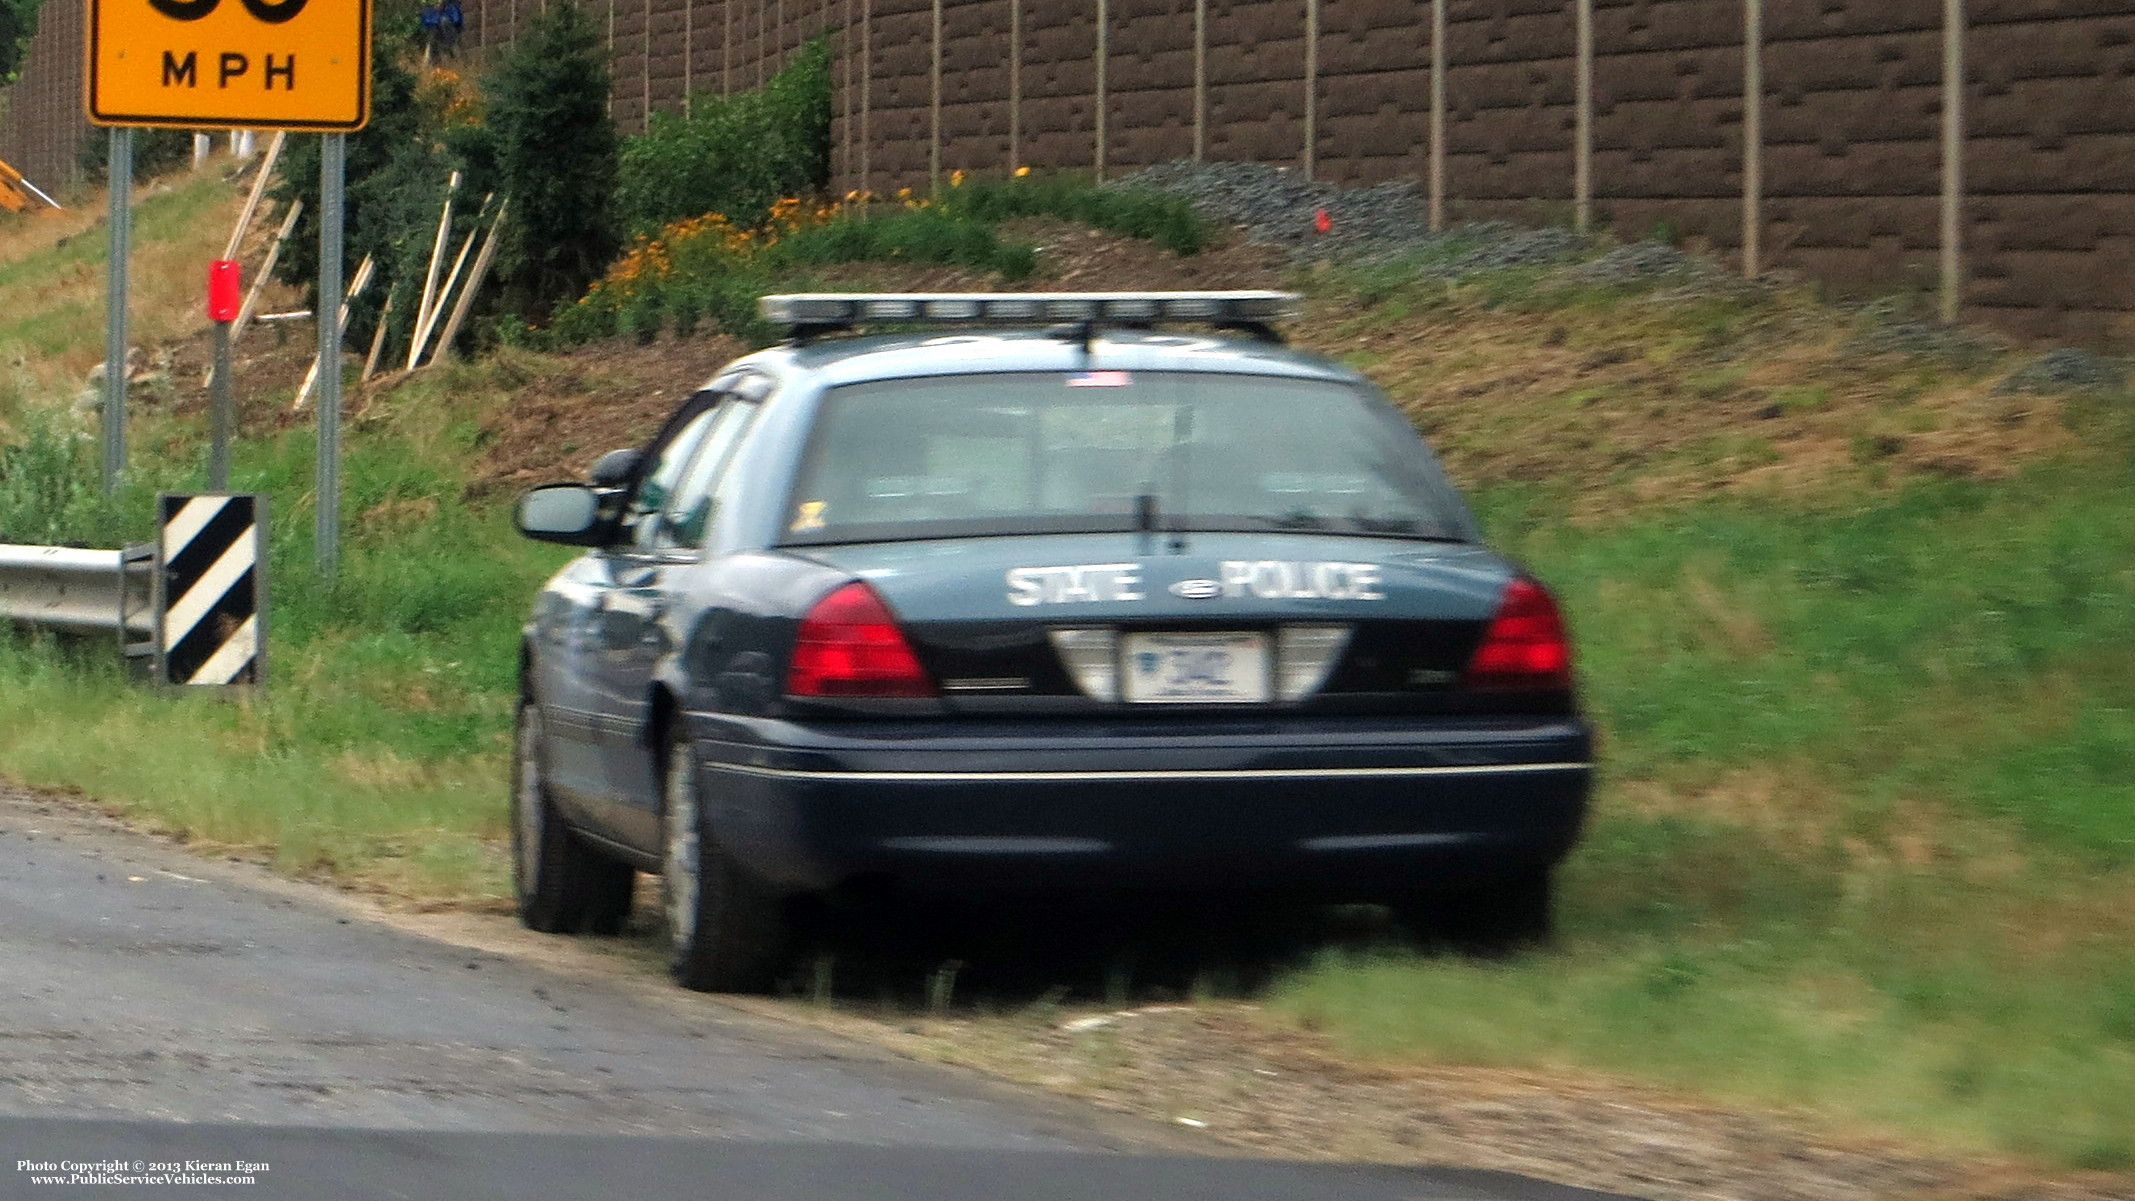 A photo  of Massachusetts State Police
            Cruiser 342, a 2009-2011 Ford Crown Victoria Police Interceptor             taken by Kieran Egan